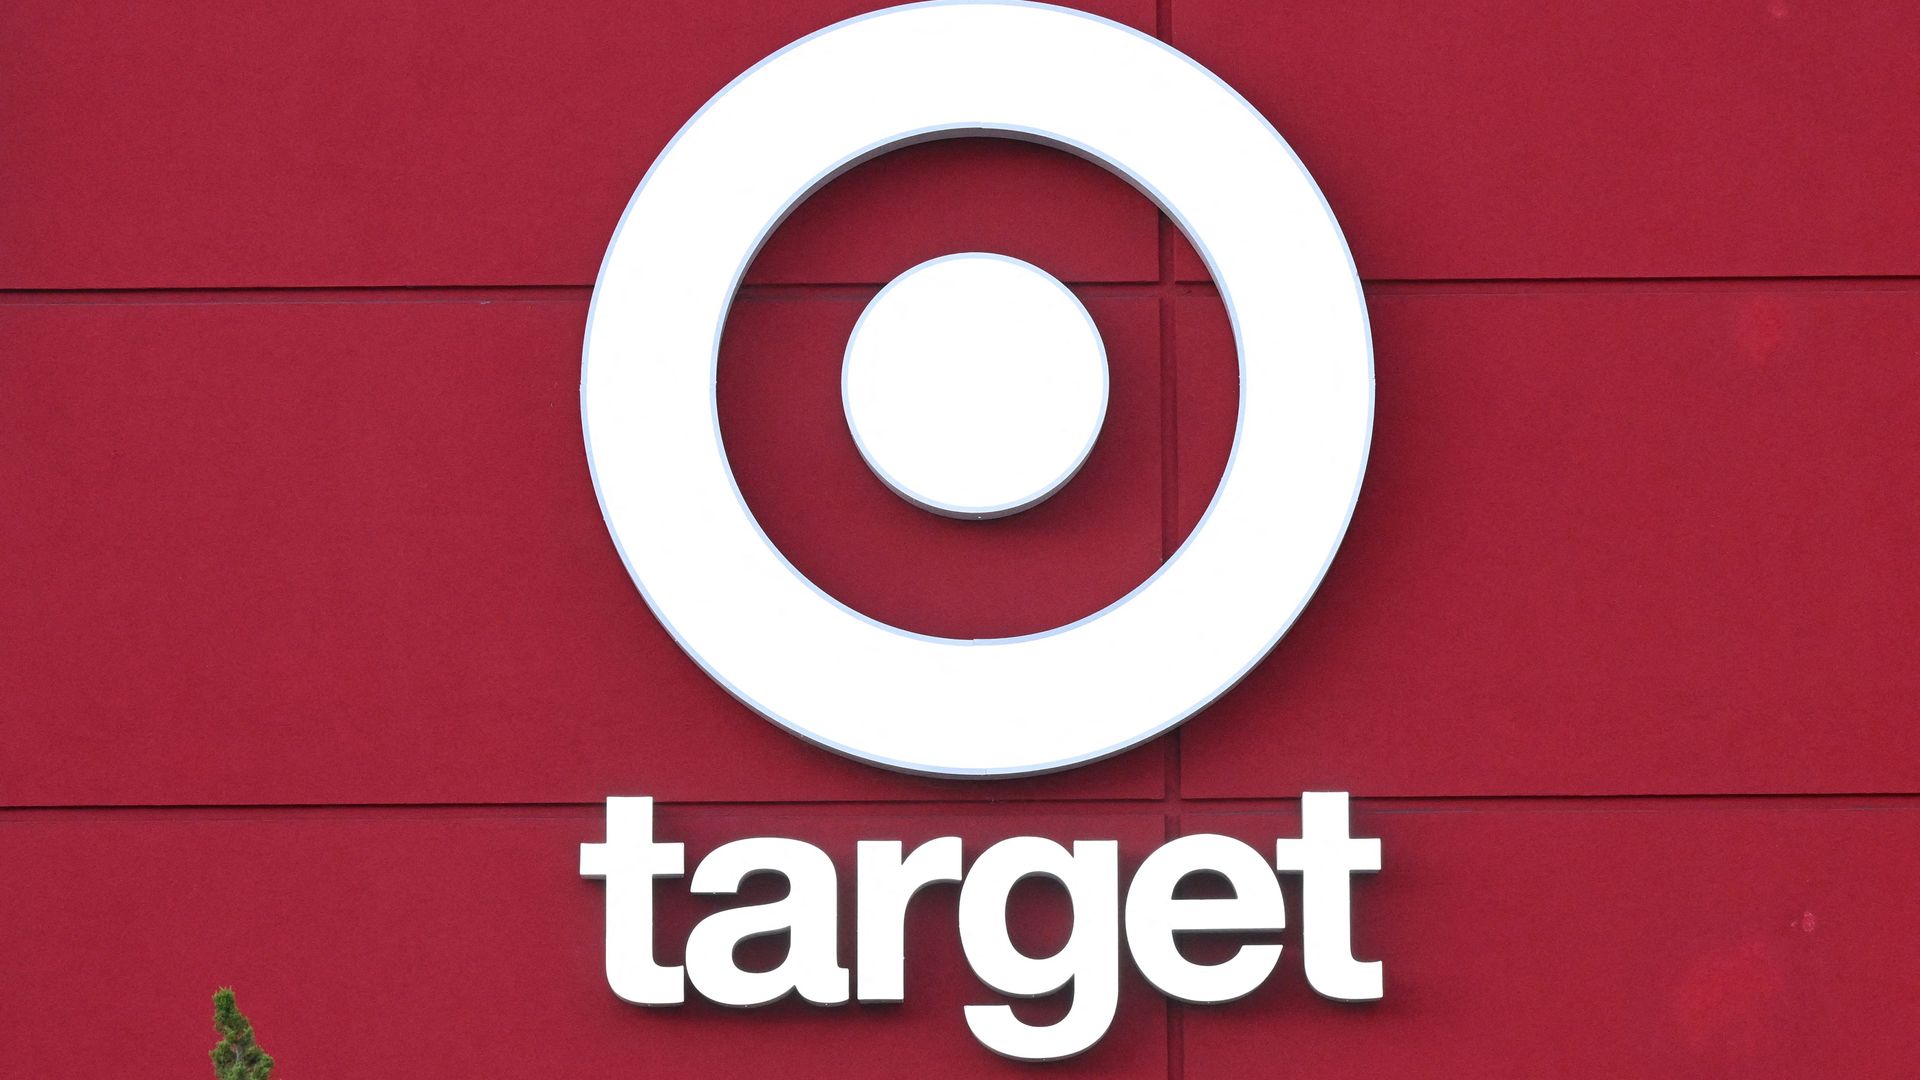 Target bullseye logo and sign reading Target on store